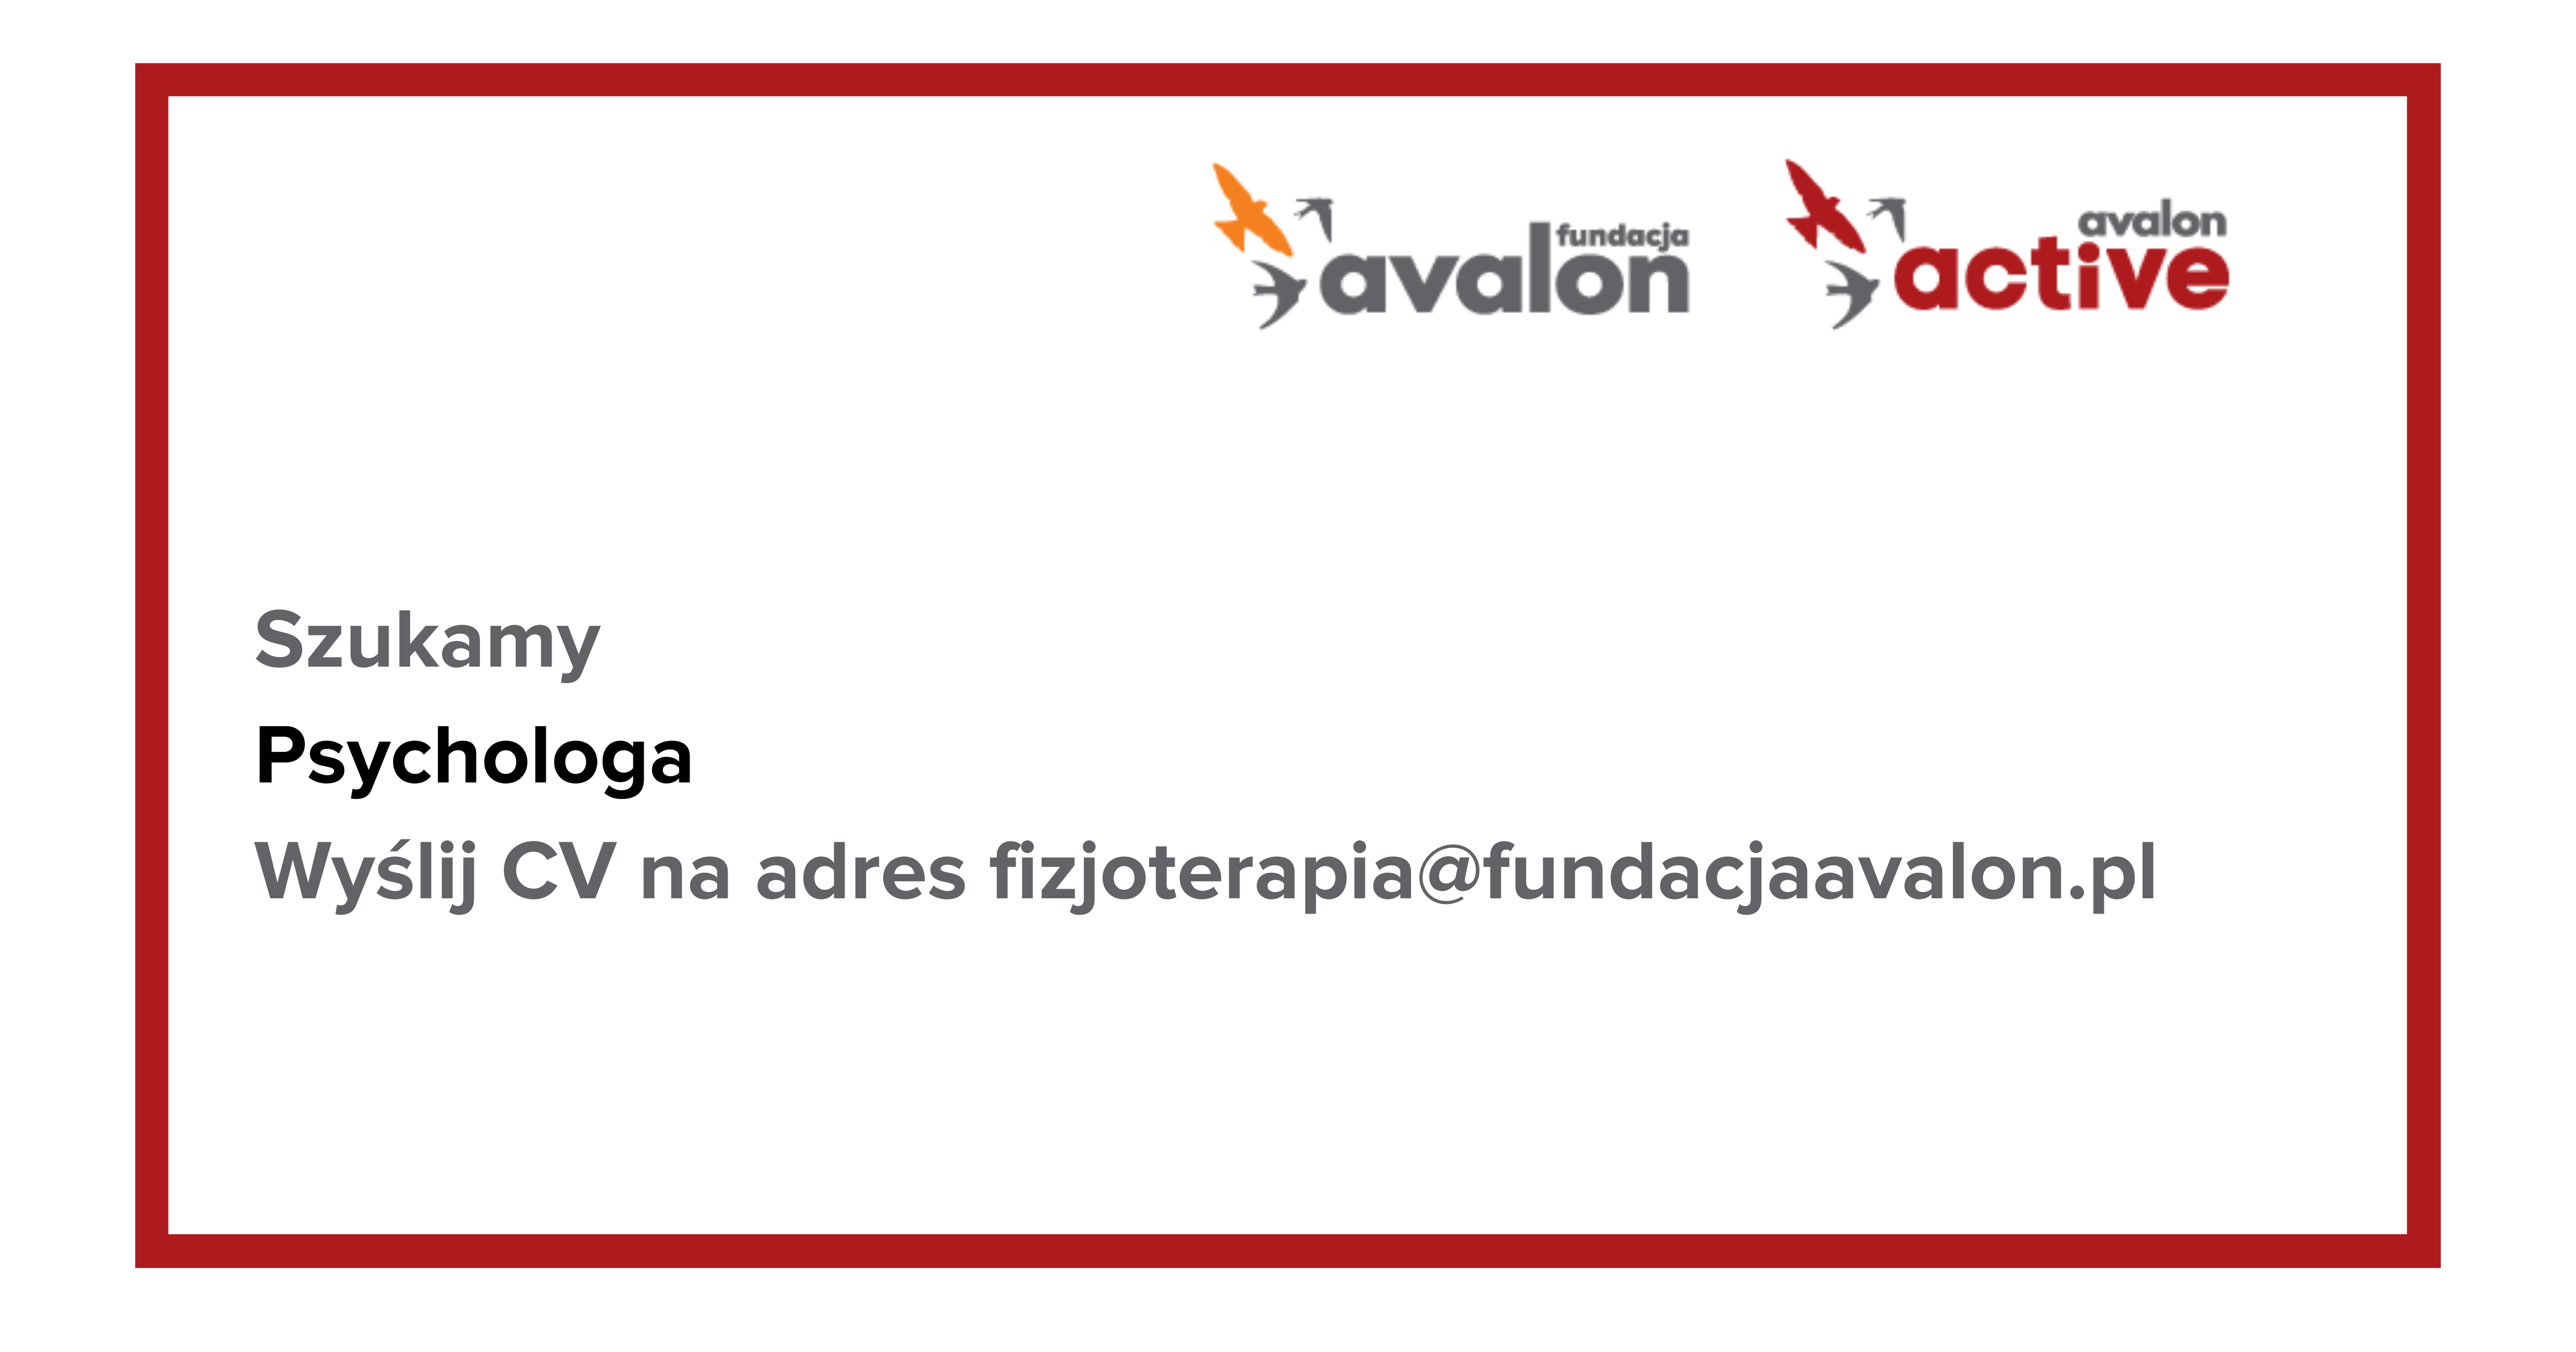 Na grafice logotypy Fundacji Avalon i Avalon Active, i napis Szukamy Psychologa Wyślij CV na adres fizjoterapia@fundacjaavalon.pl